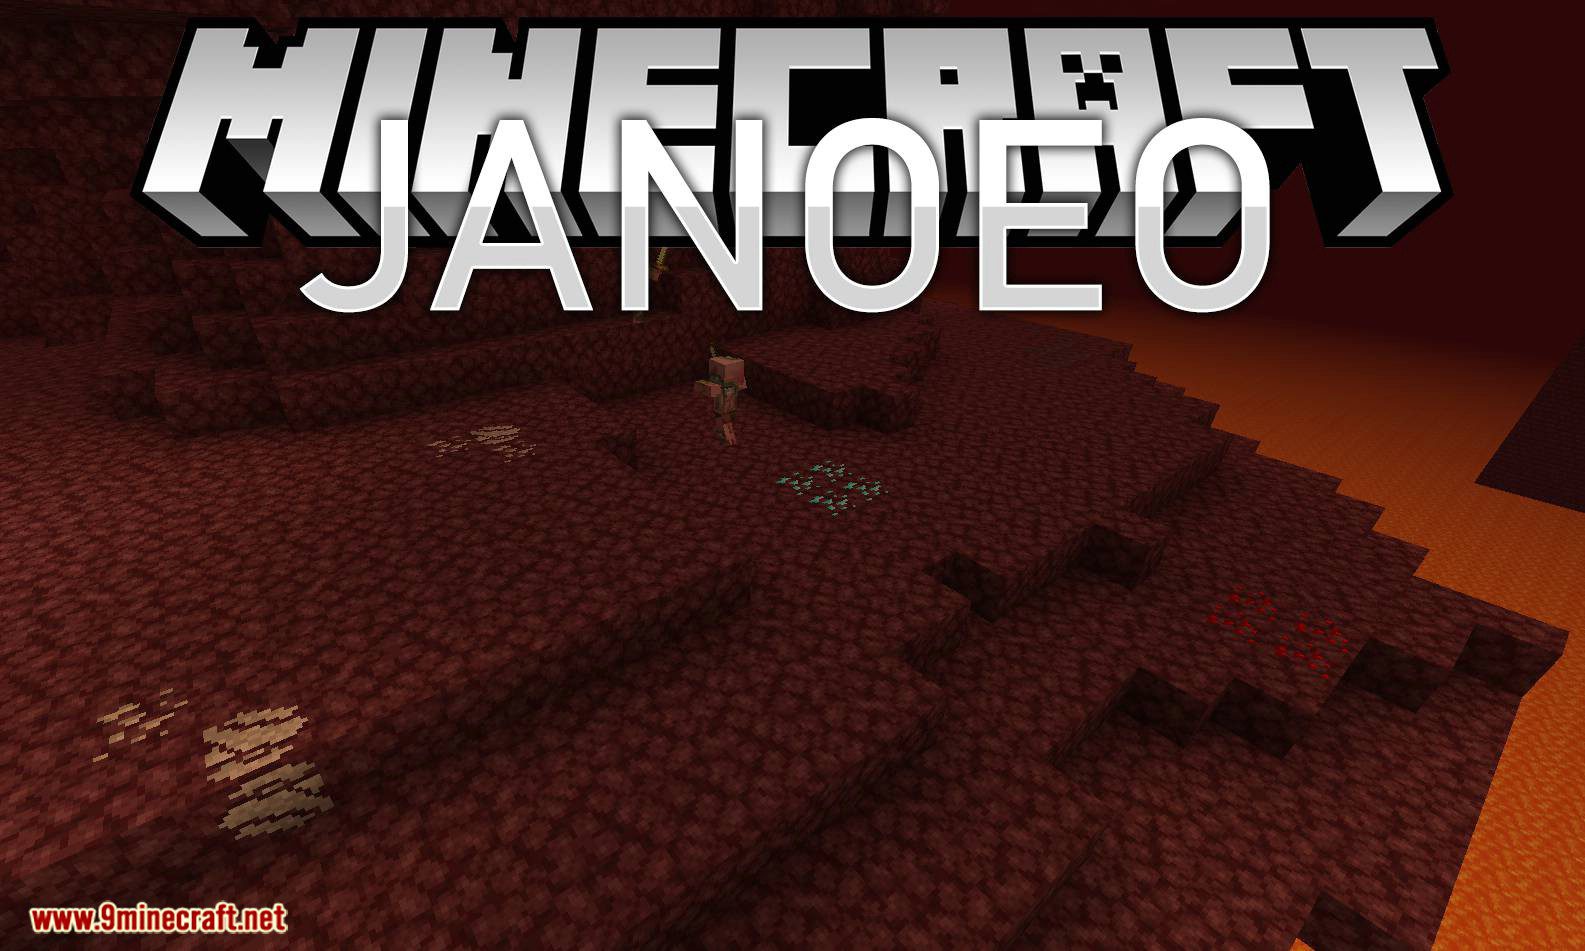 JANOEO mod for minecraft logo